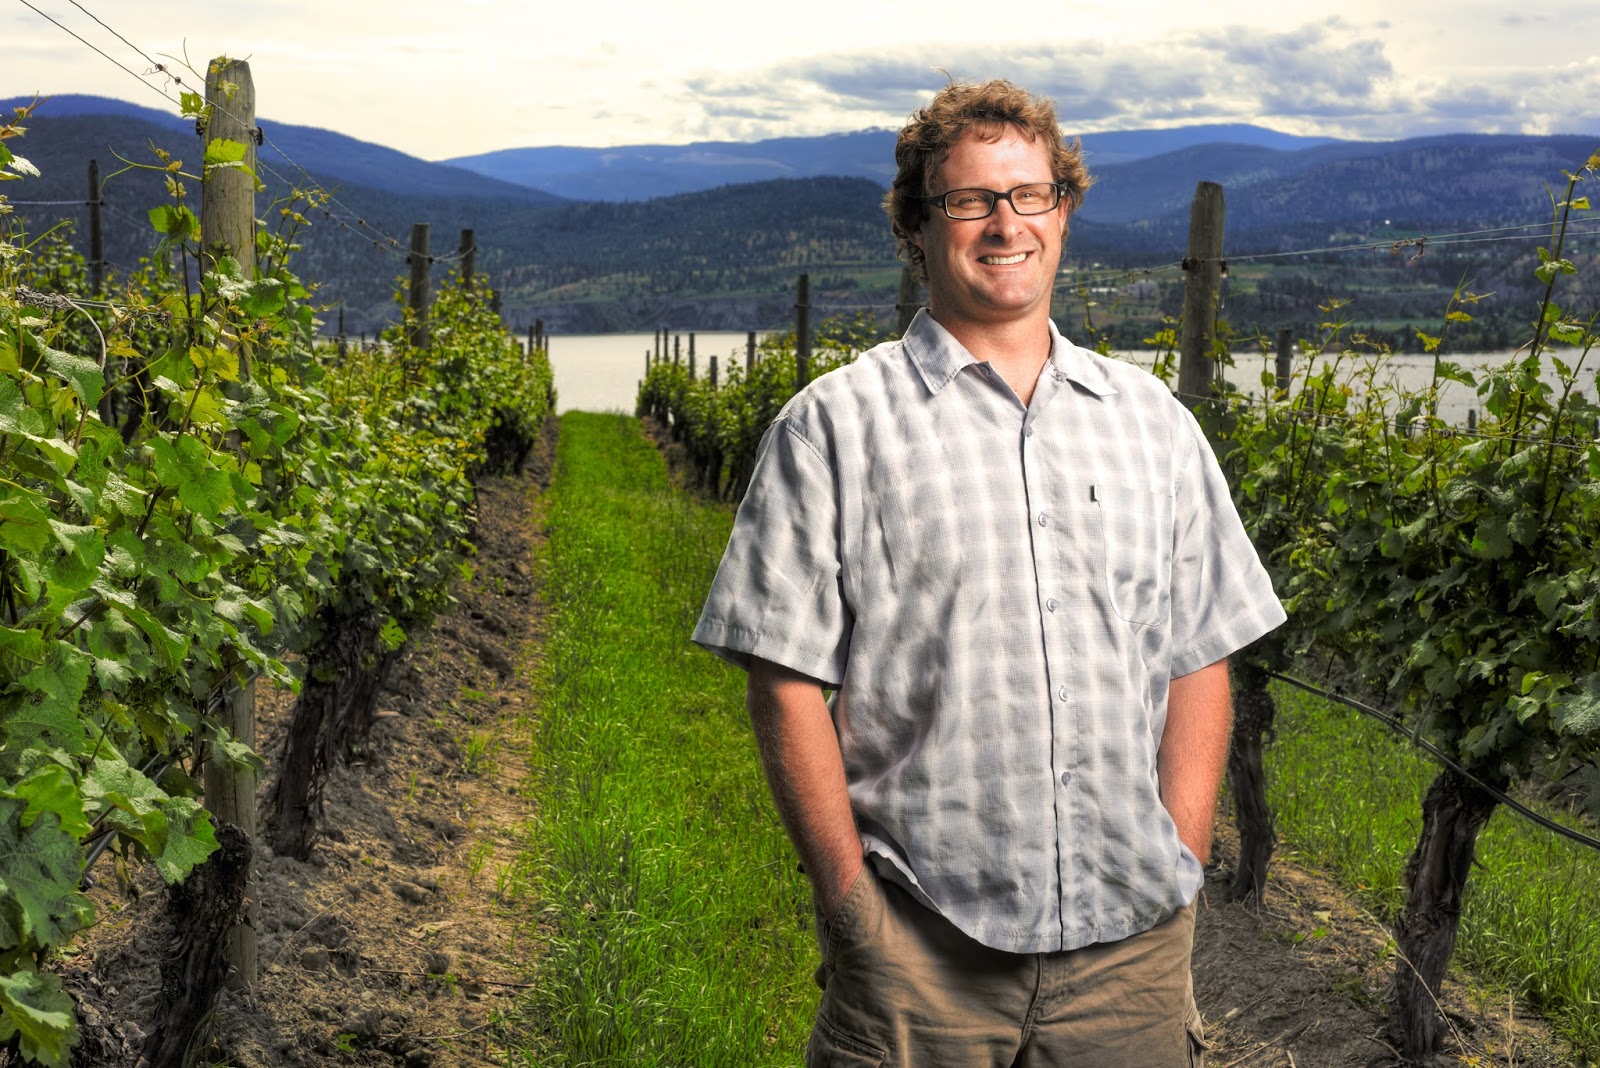 John Schreiner on wine: Lake Breeze scoops peers with 2015 wines